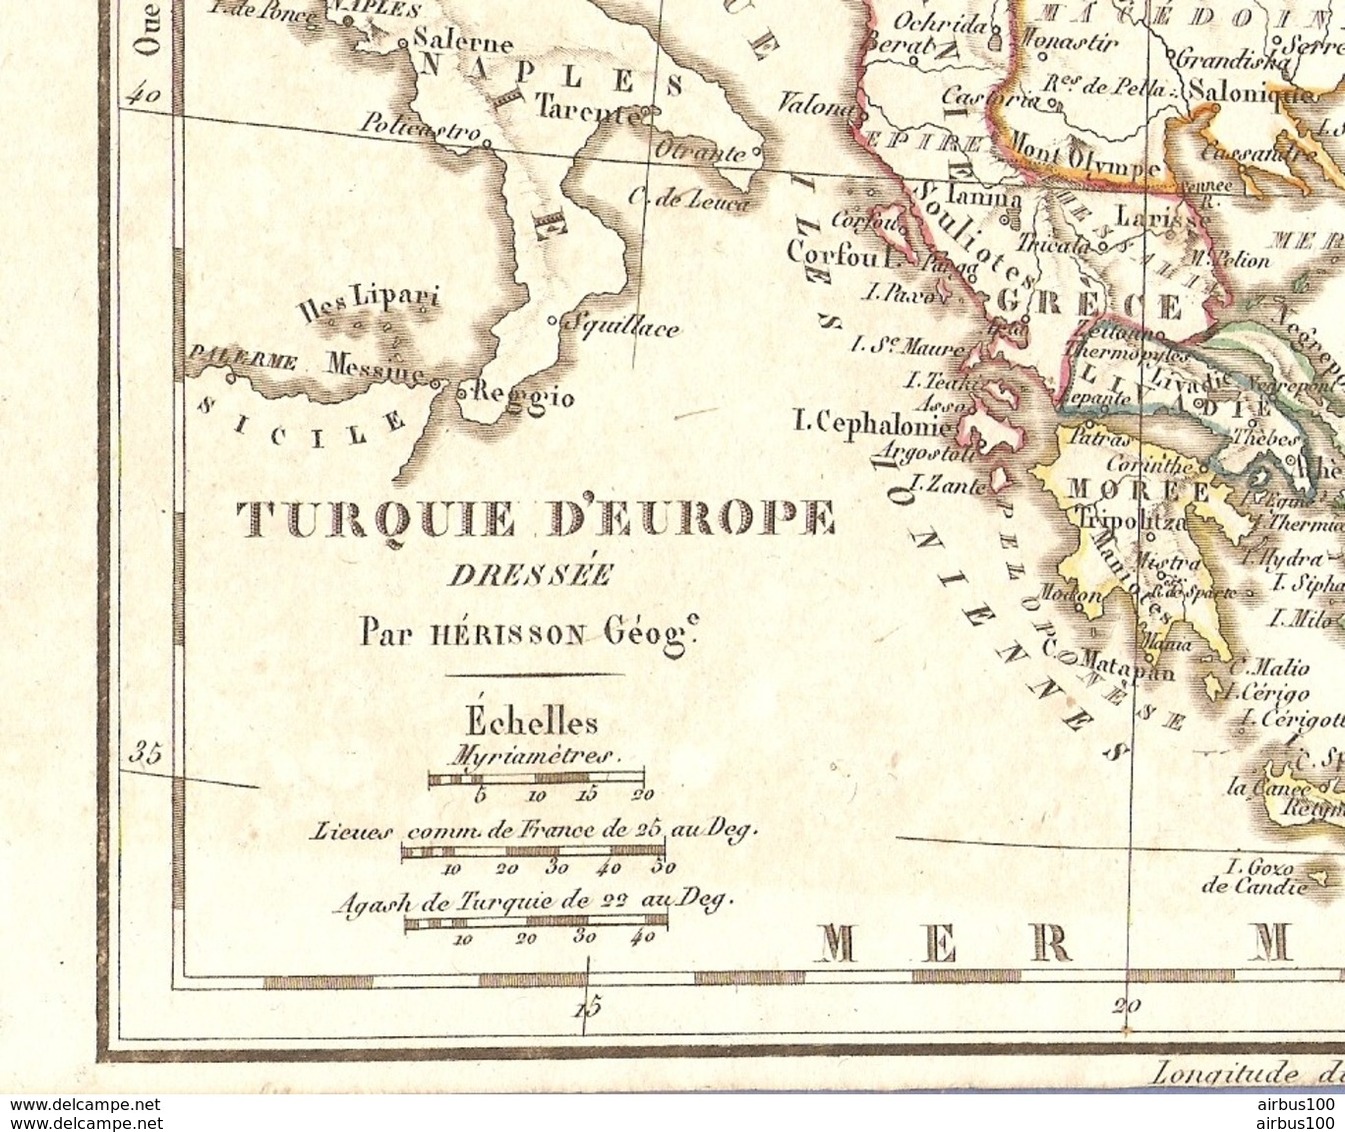 CARTE ANNÉE 1828 TURQUIE D'EUROPE - MAP YEAR 1828 TURKEY OF EUROPE - EUROPA TÜRKEI - EUROPA TURQUÍA - TURCHIA EUROPEA - Cartes Géographiques